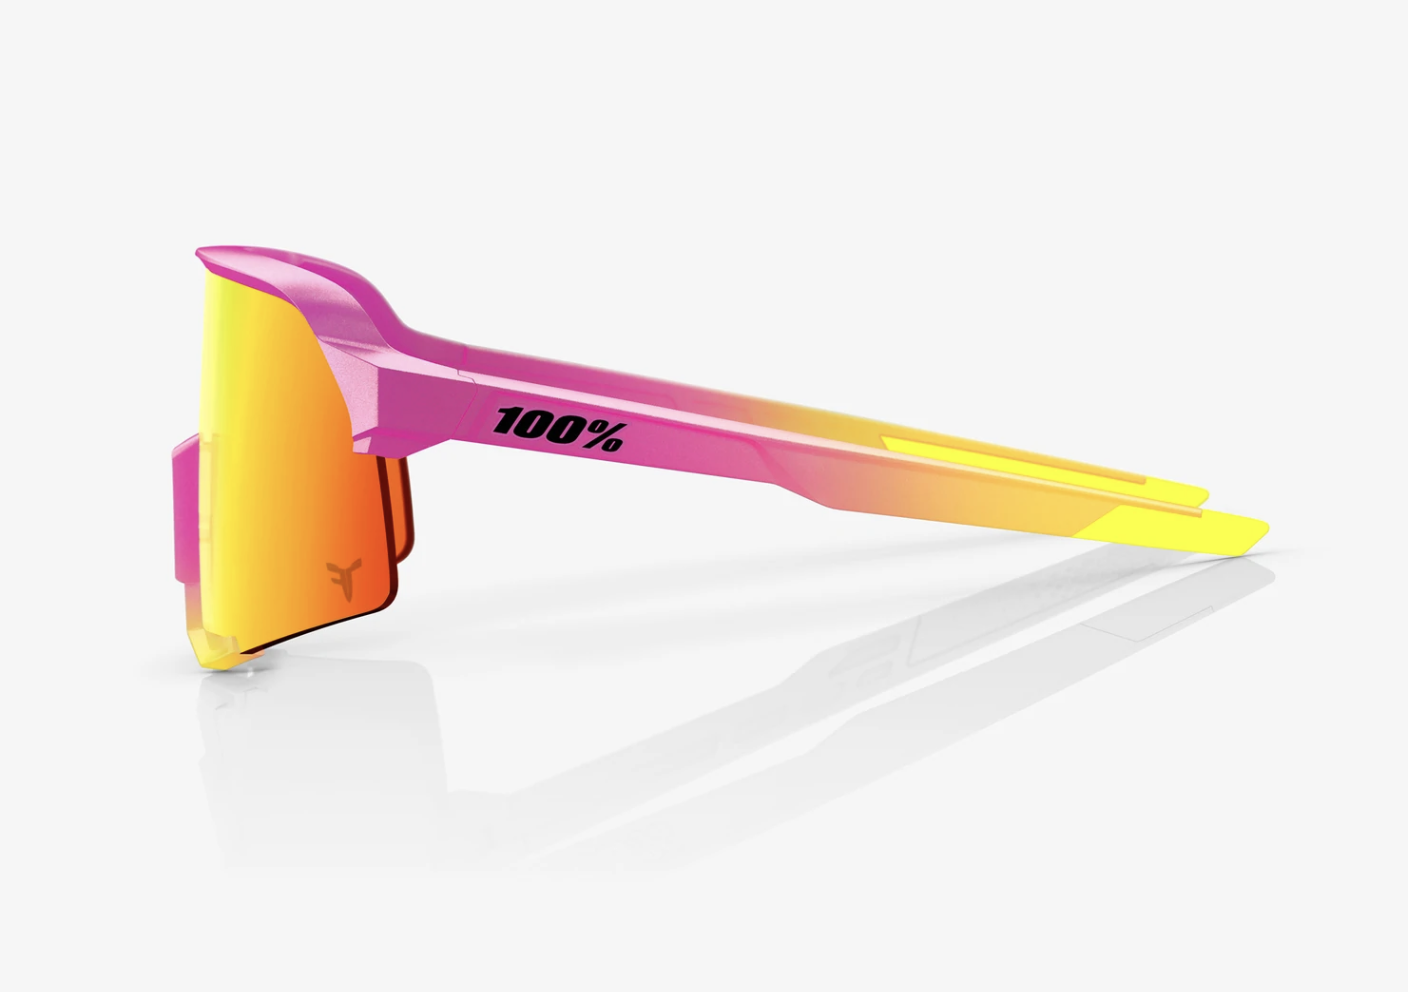 100% S3 Fernando Tatis Jr Special Edition Colorway Metallic Pink Fading to Yellow